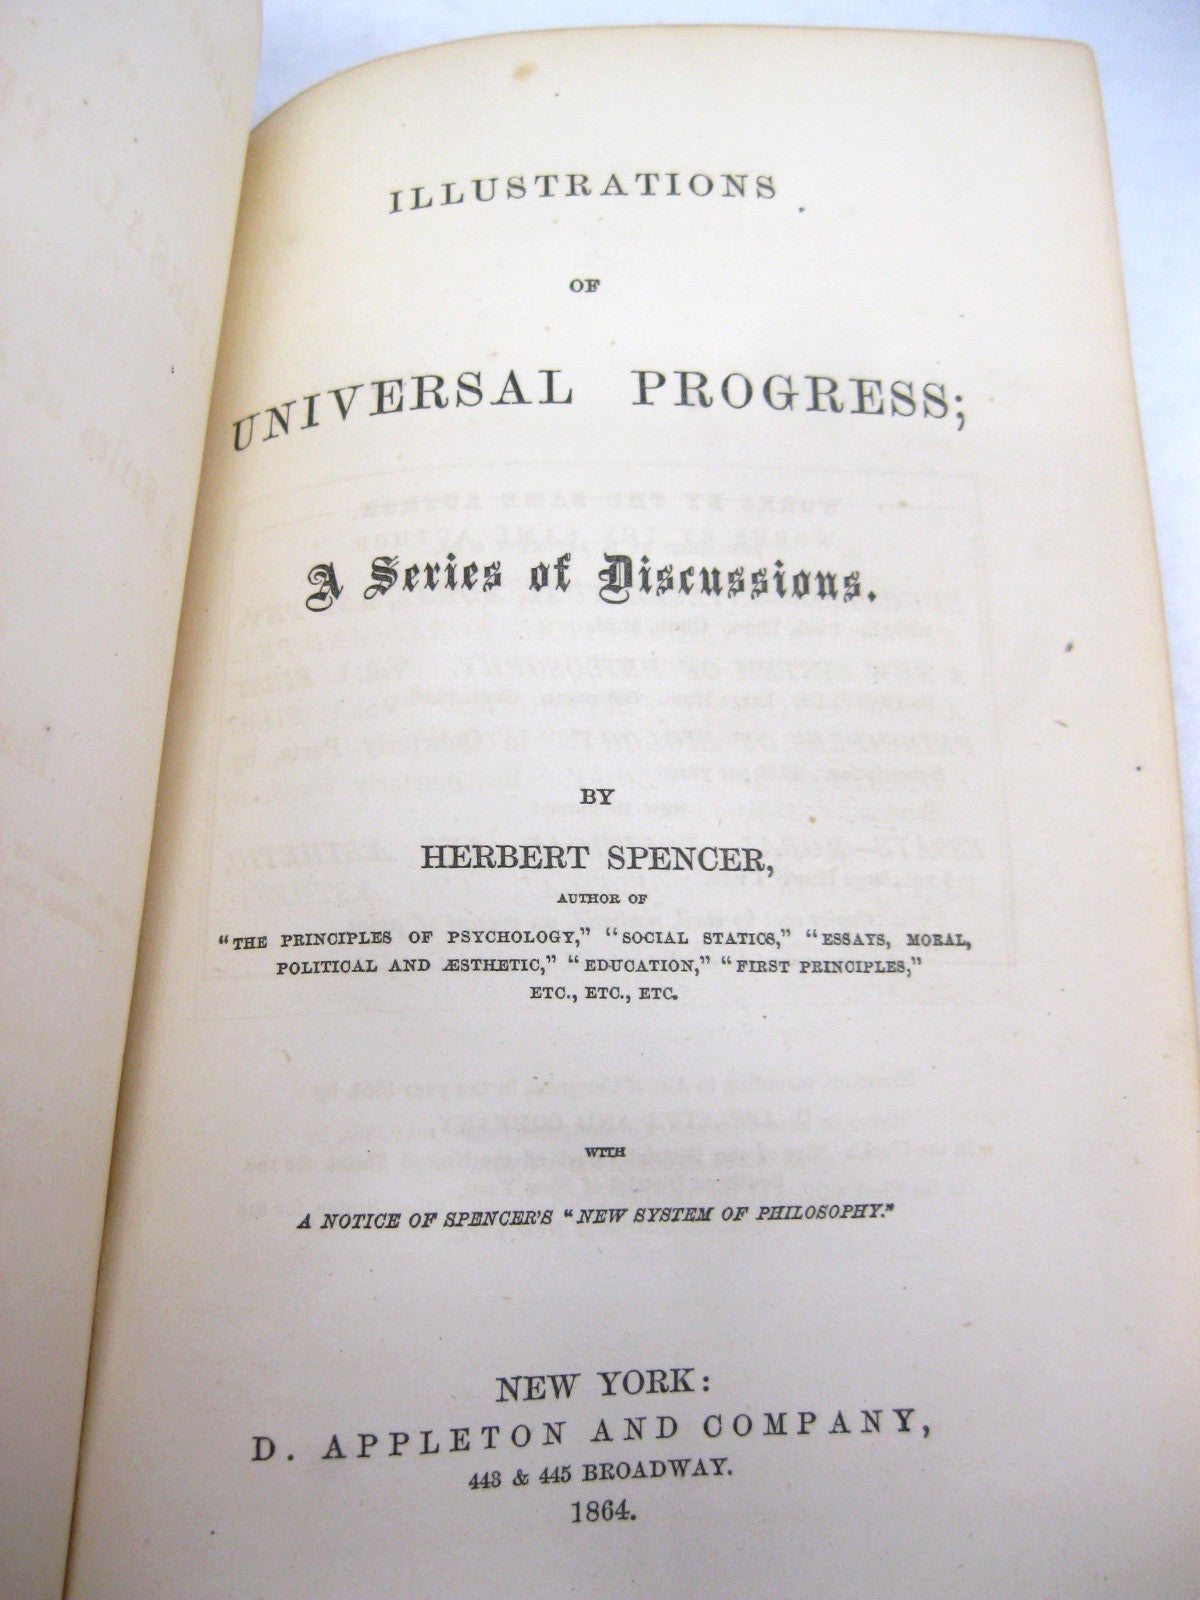 Illustrations of Universal Progress by Herbert Spencer